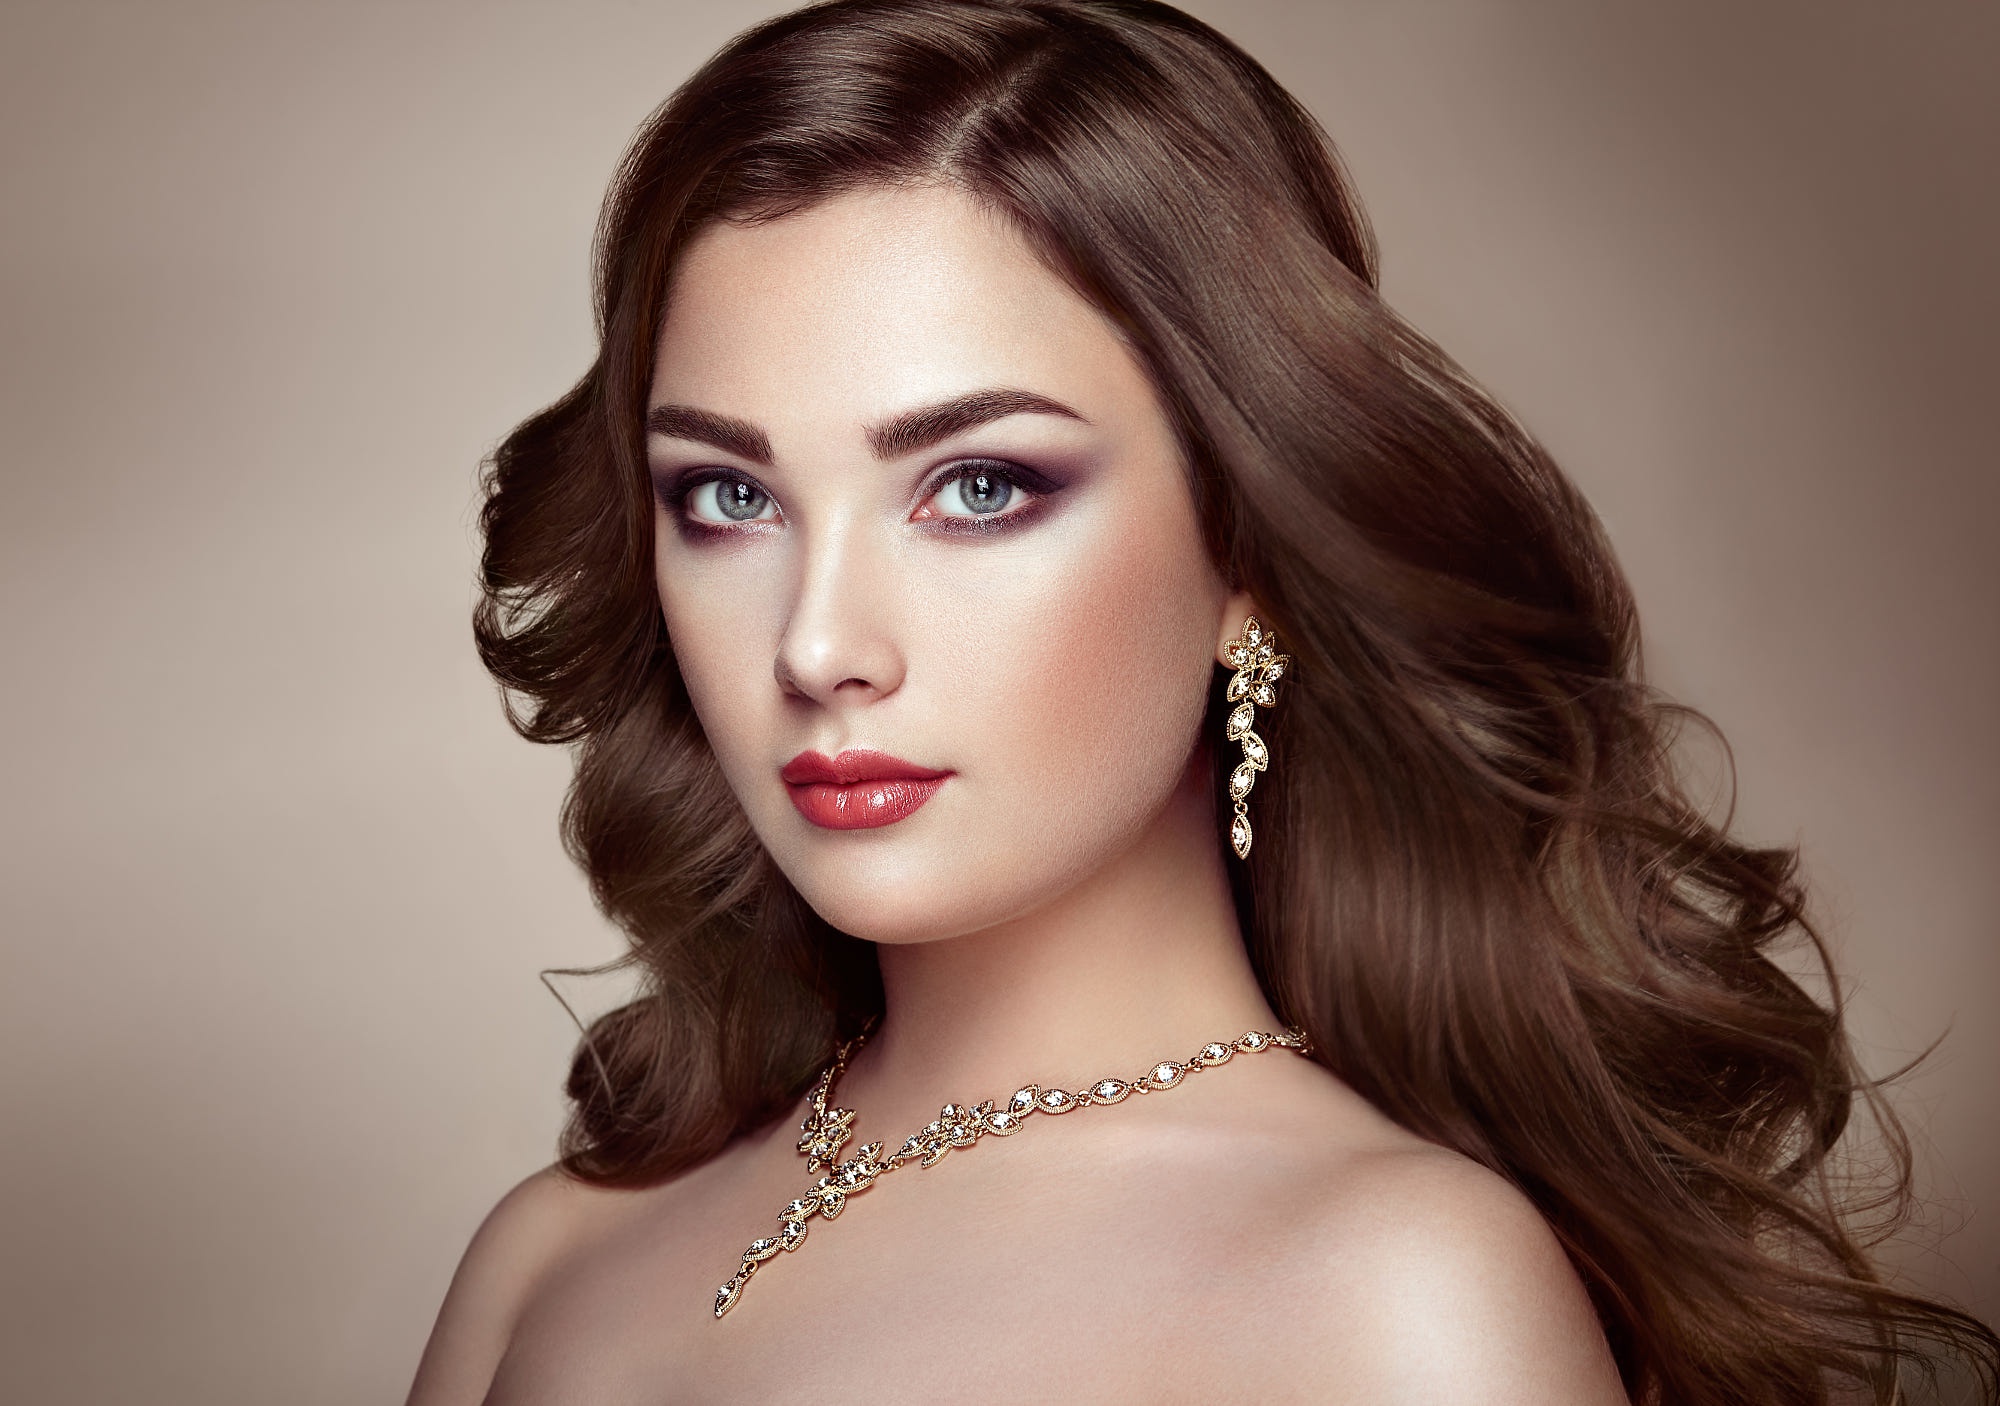 People 2000x1406 women model portrait face red lipstick necklace brunette glamour simple background closeup